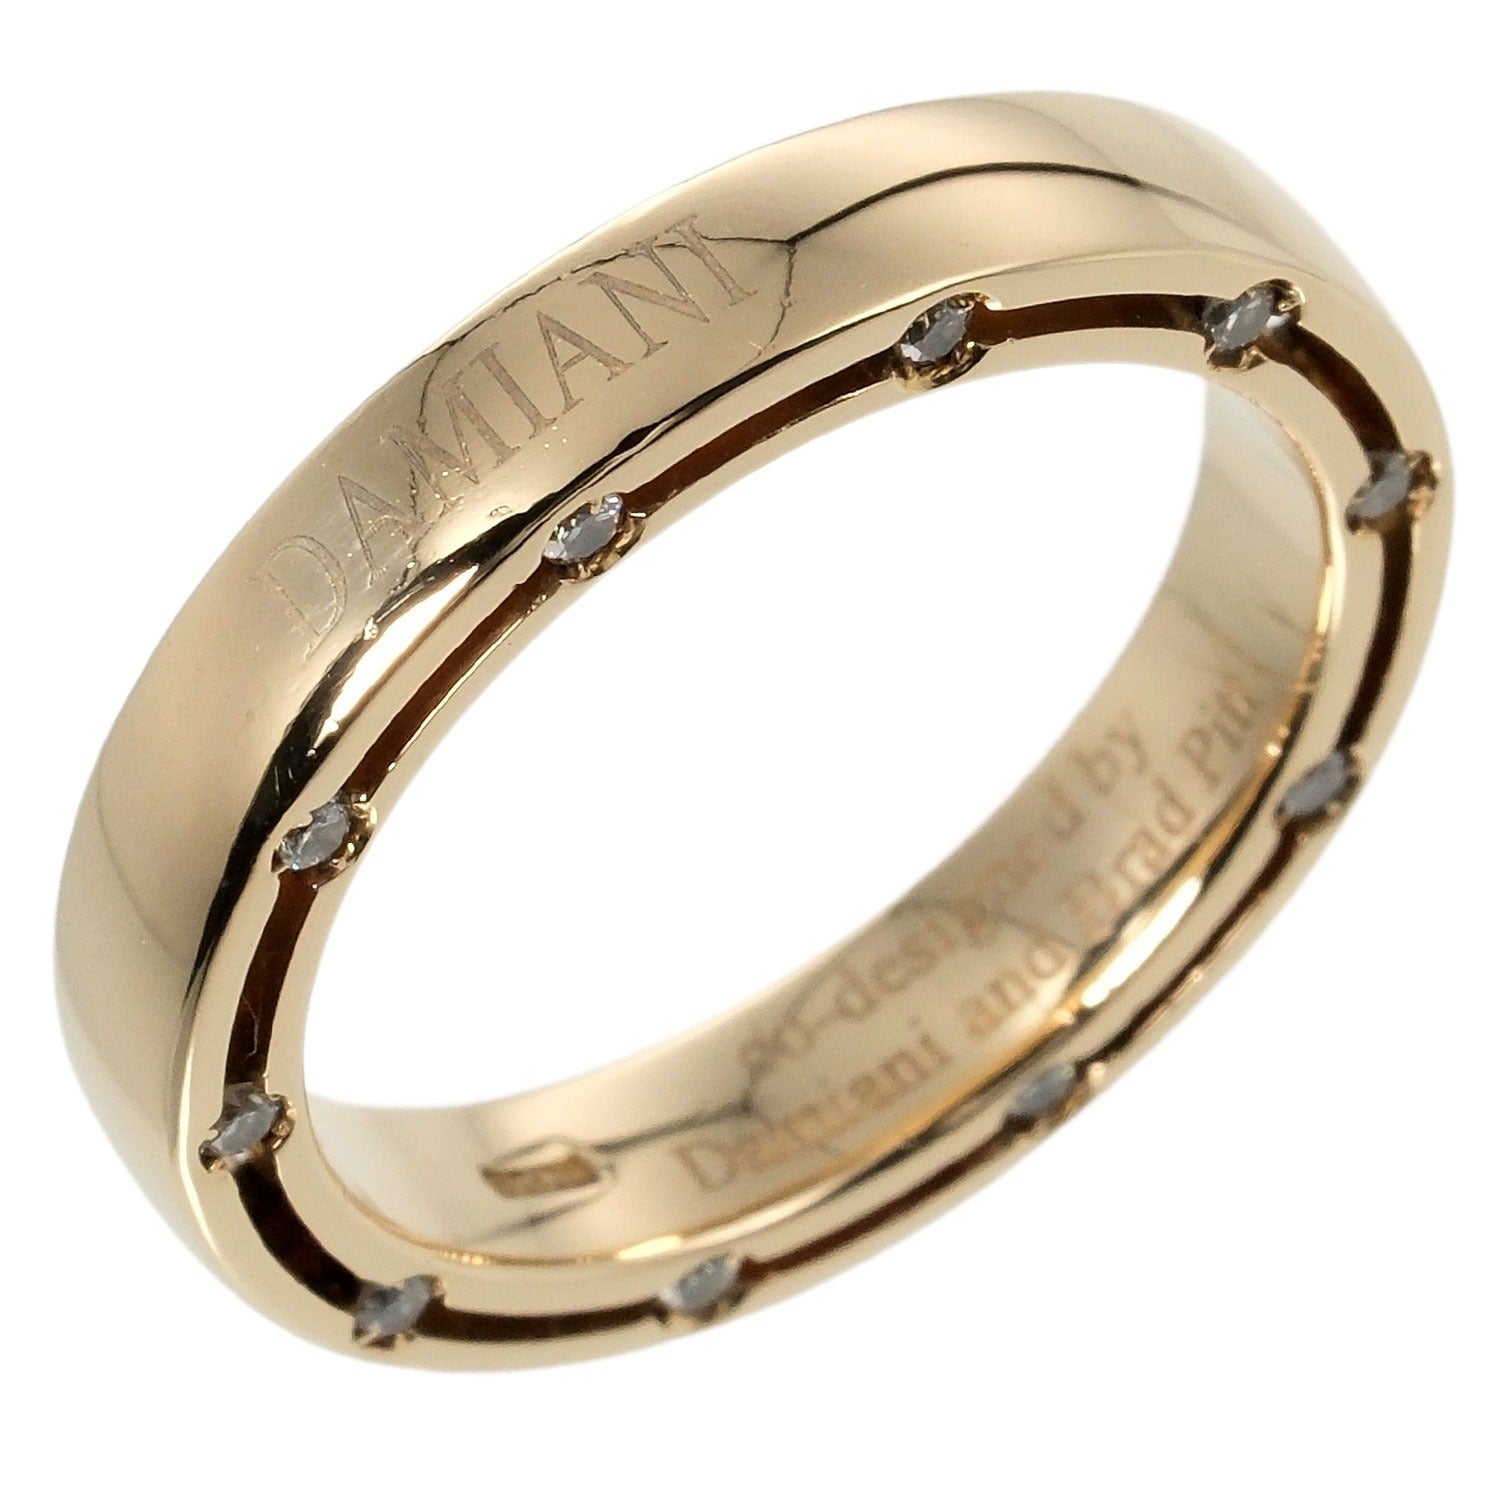 Damiani D-Side Ring, Size 10.5, 20P Diamond, 5.69g, K18 Yellow Gold, Damiani, Preloved, A+ grade